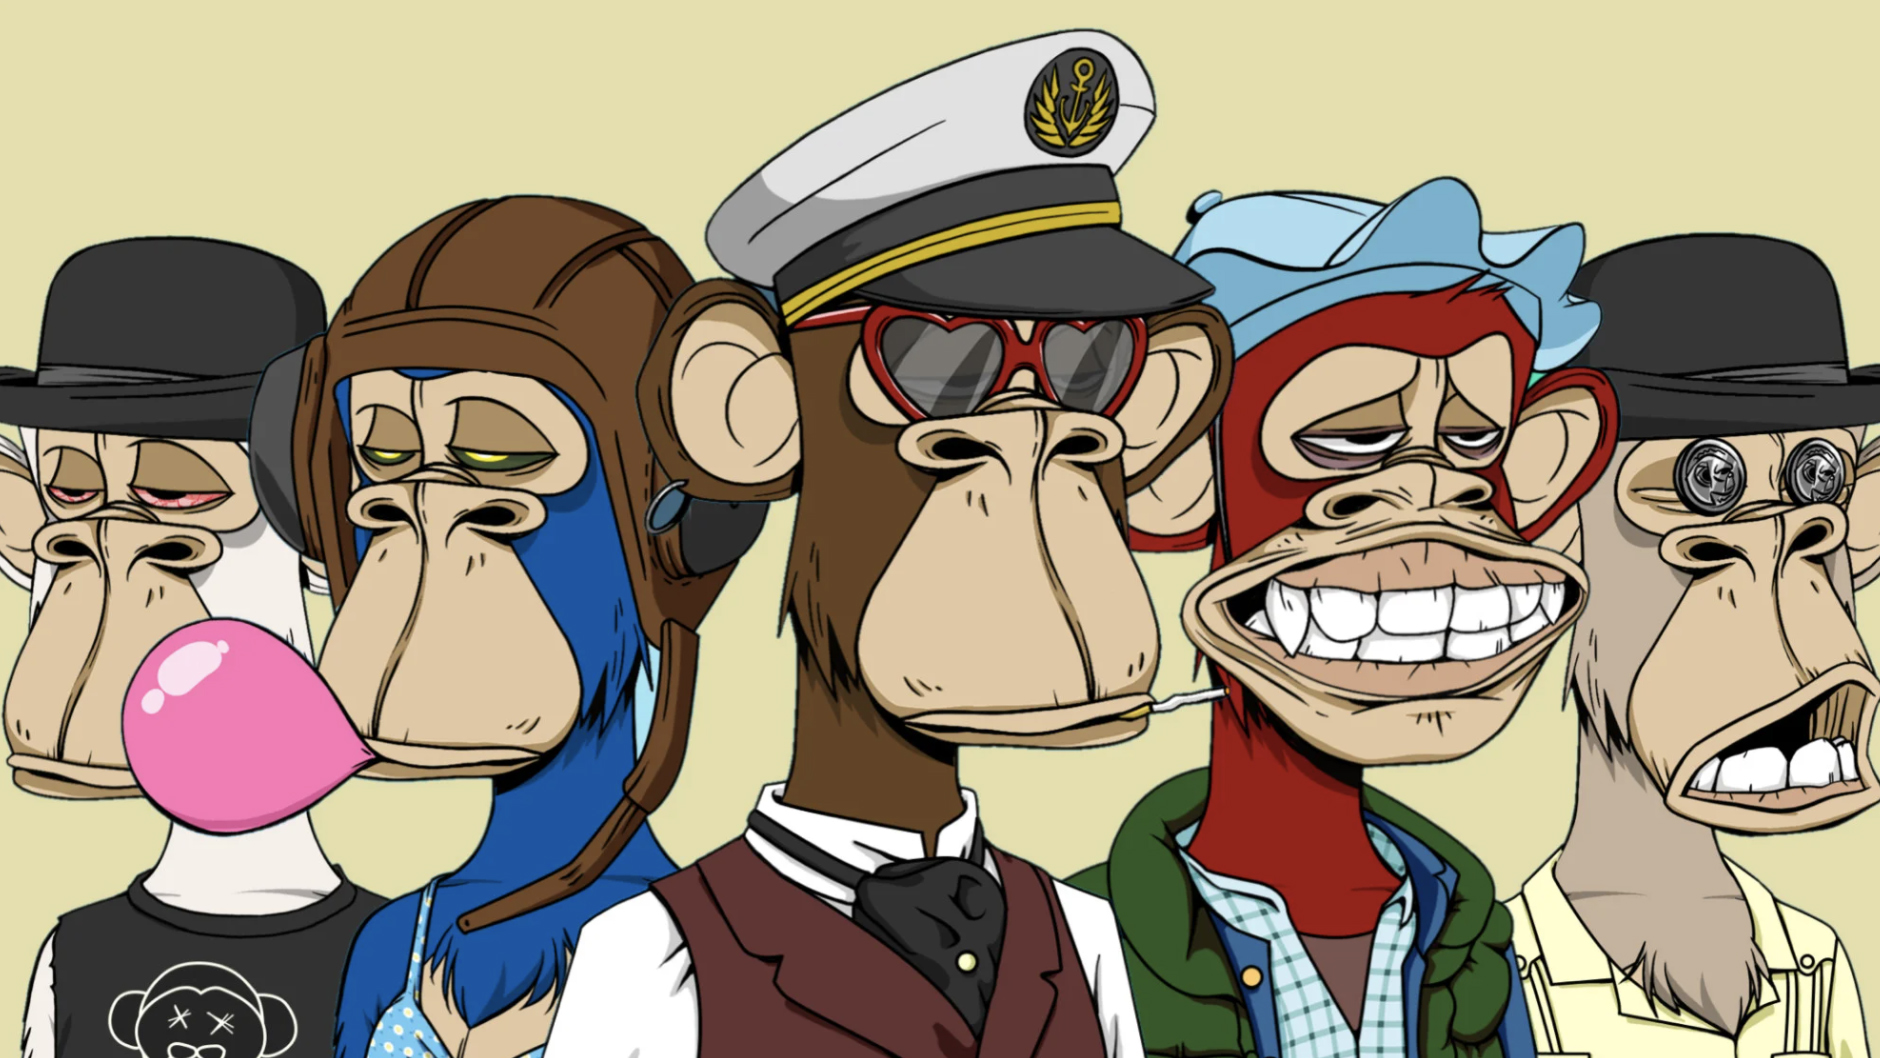 Buying NFTs: illustrators of monkeys in costumes